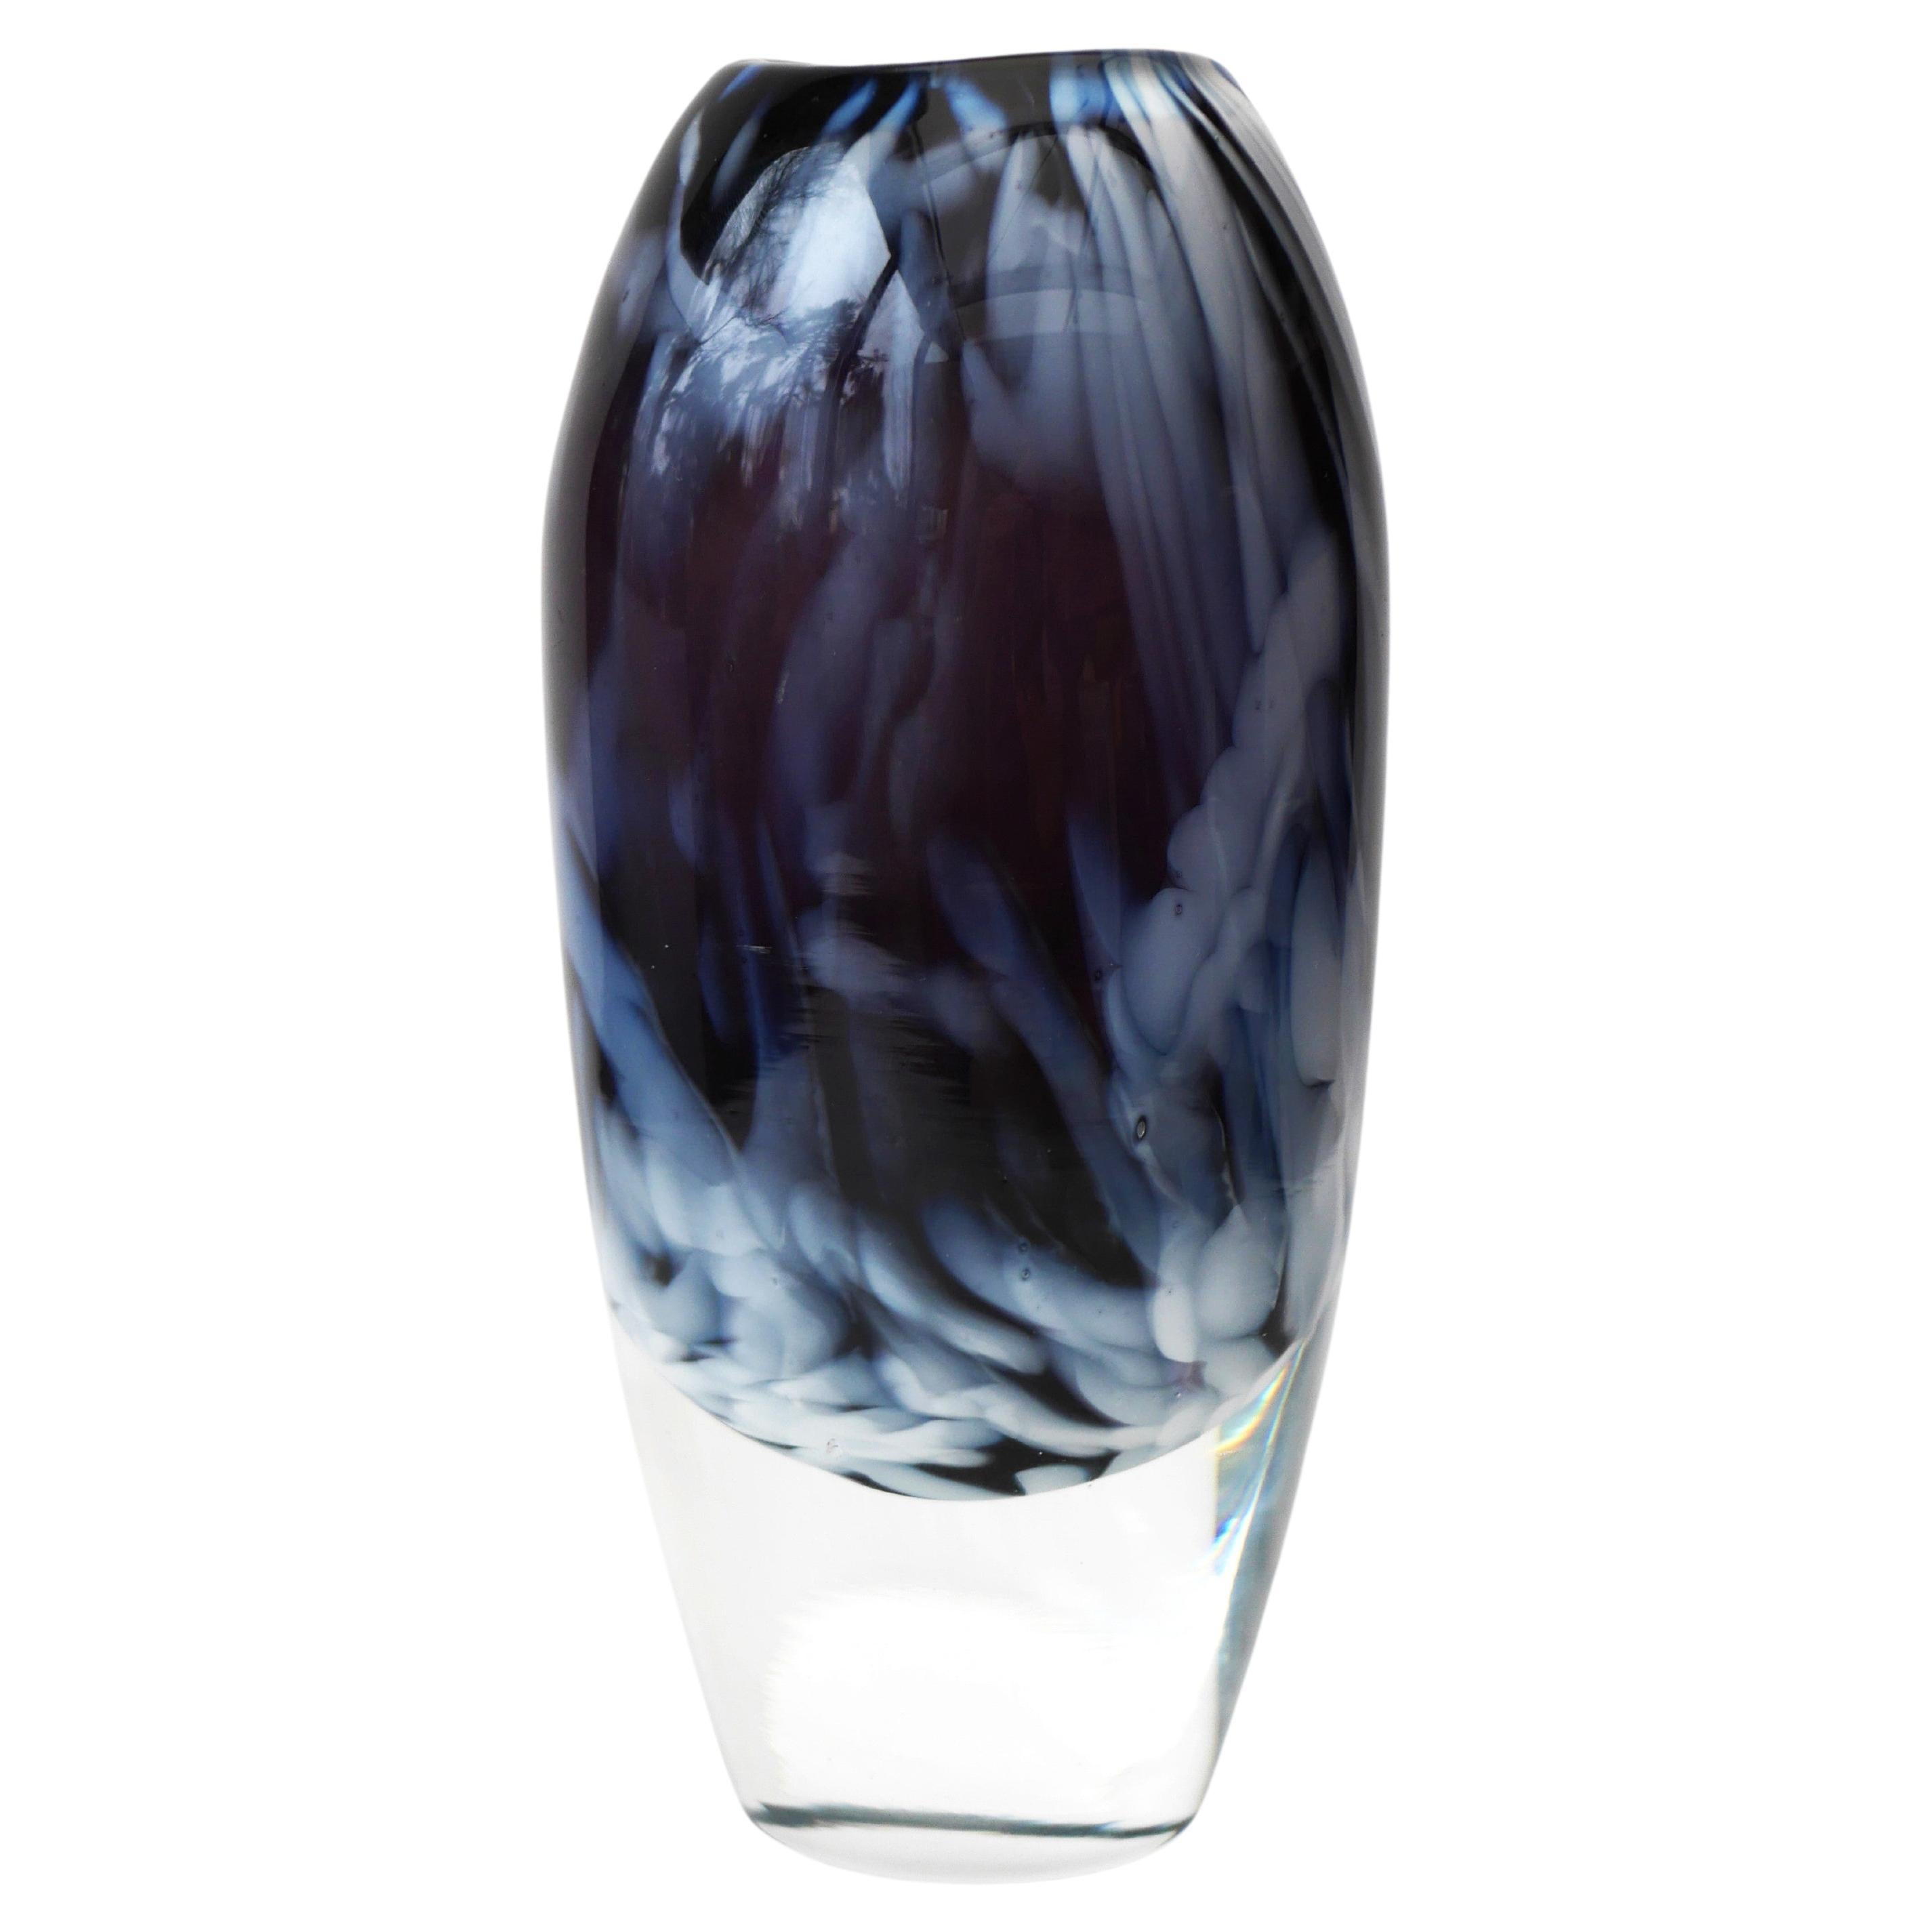 Skandinavische Vase aus Kunstglas von Kjell Engman, Sea Glassbruk, Schweden